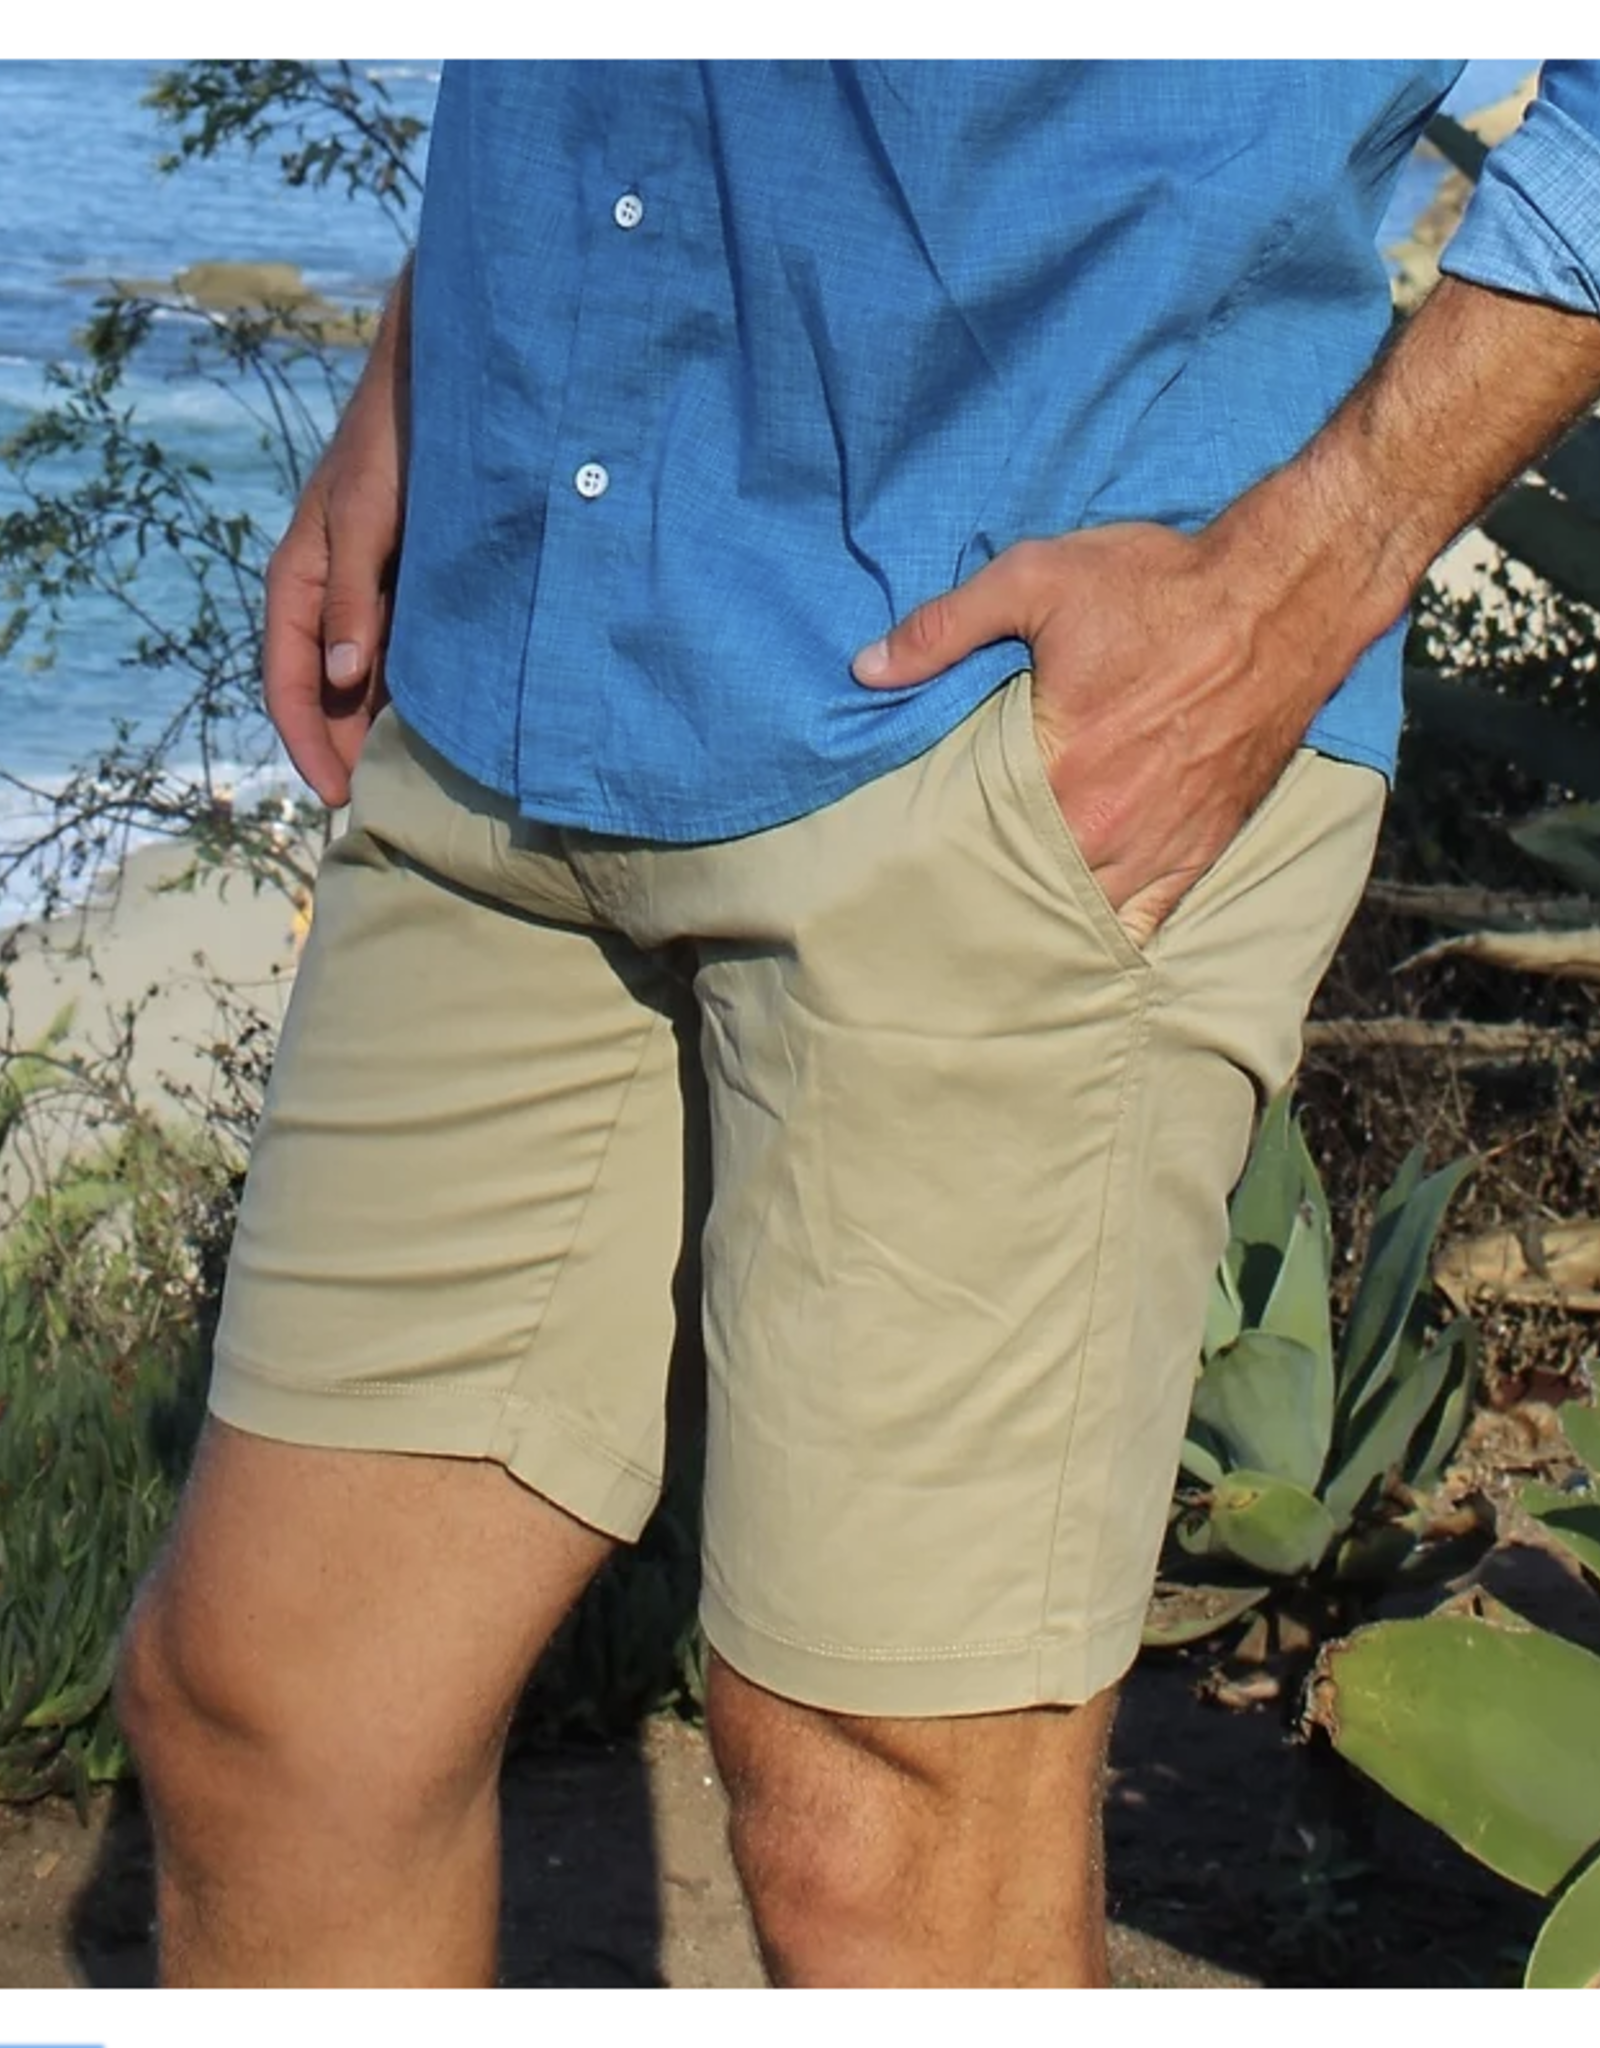 Henri Costa Sanibel Khaki Shorts